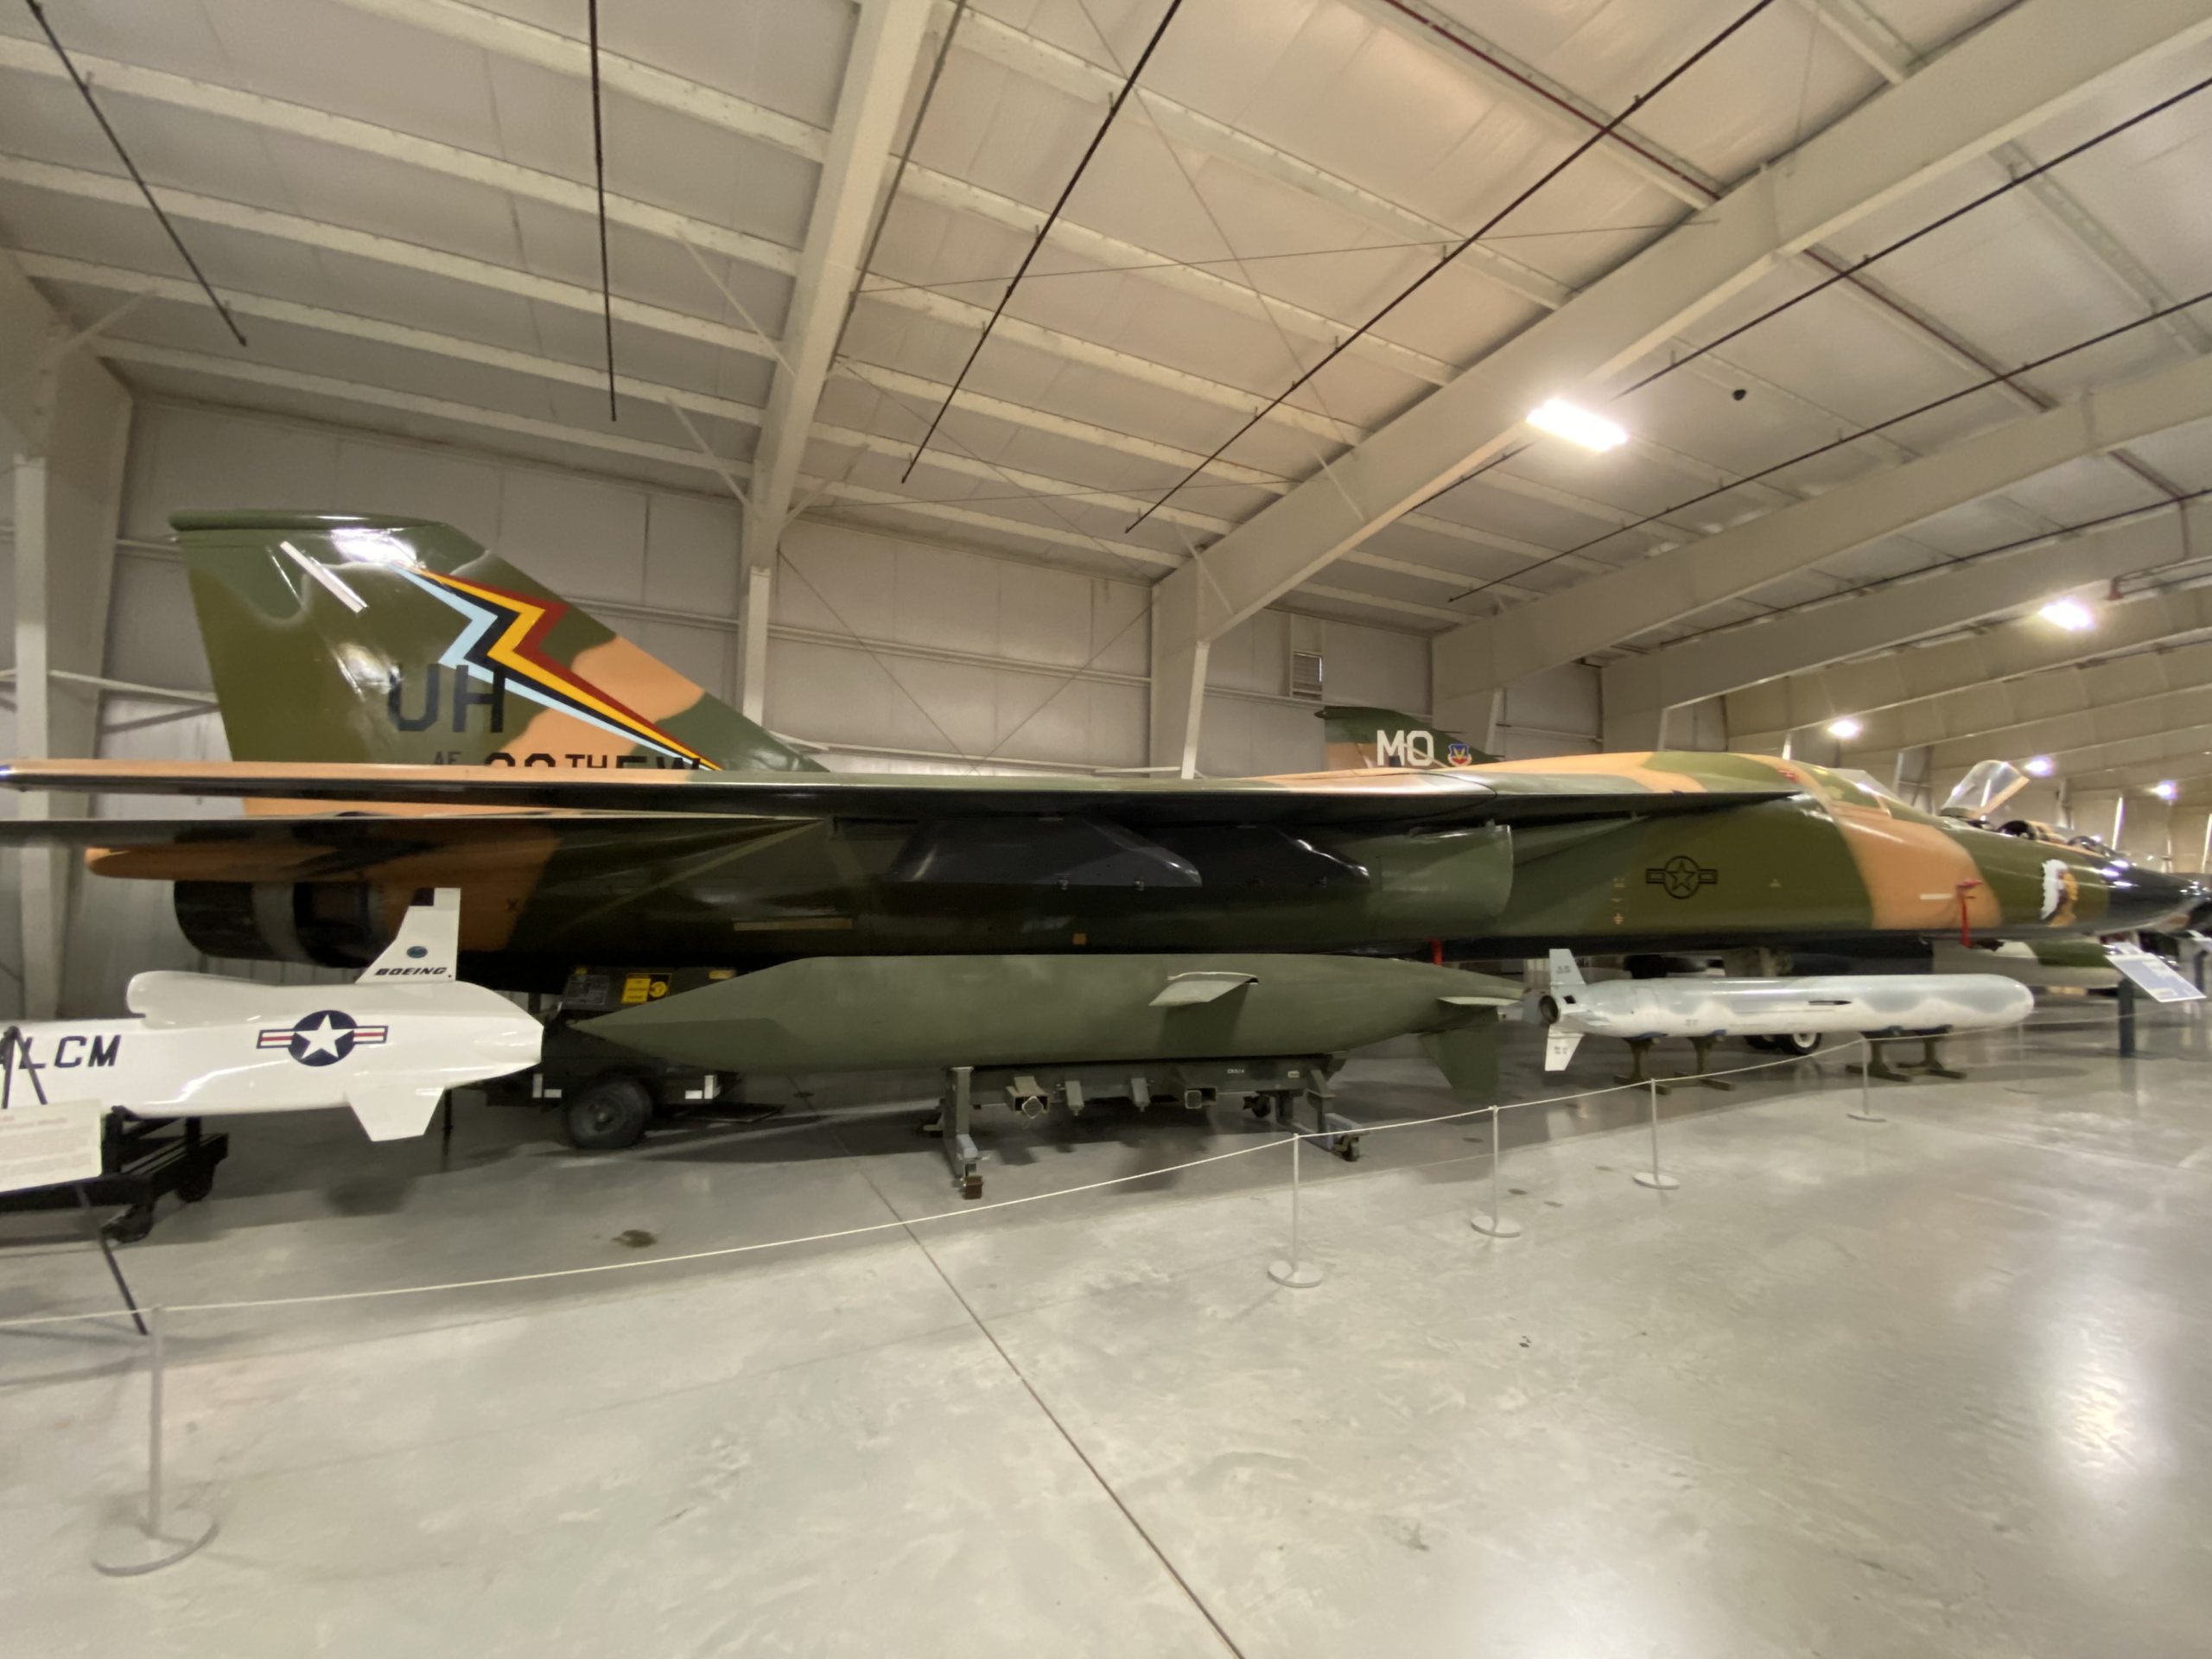 General Dynamics F-111E Aardvark